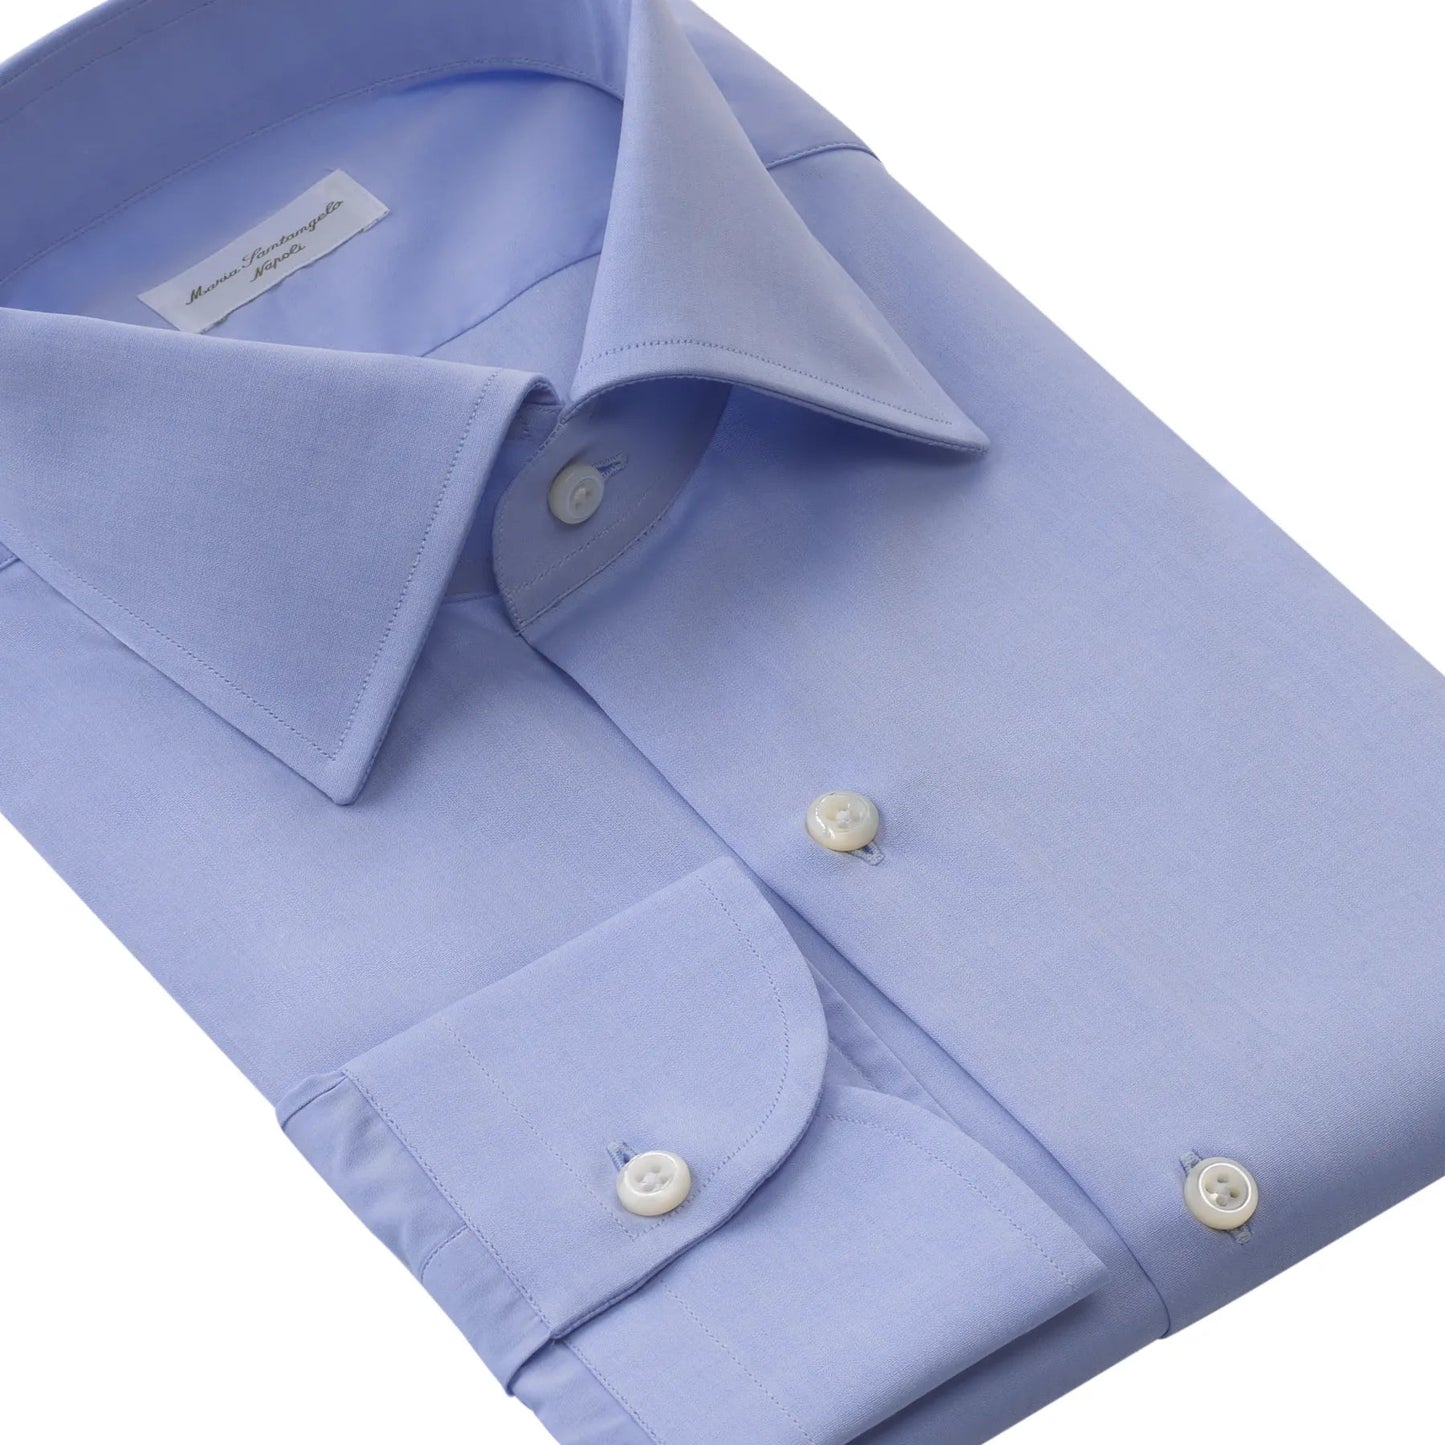 Maria Santangelo Plain Cotton Shirt in Light Blue - SARTALE